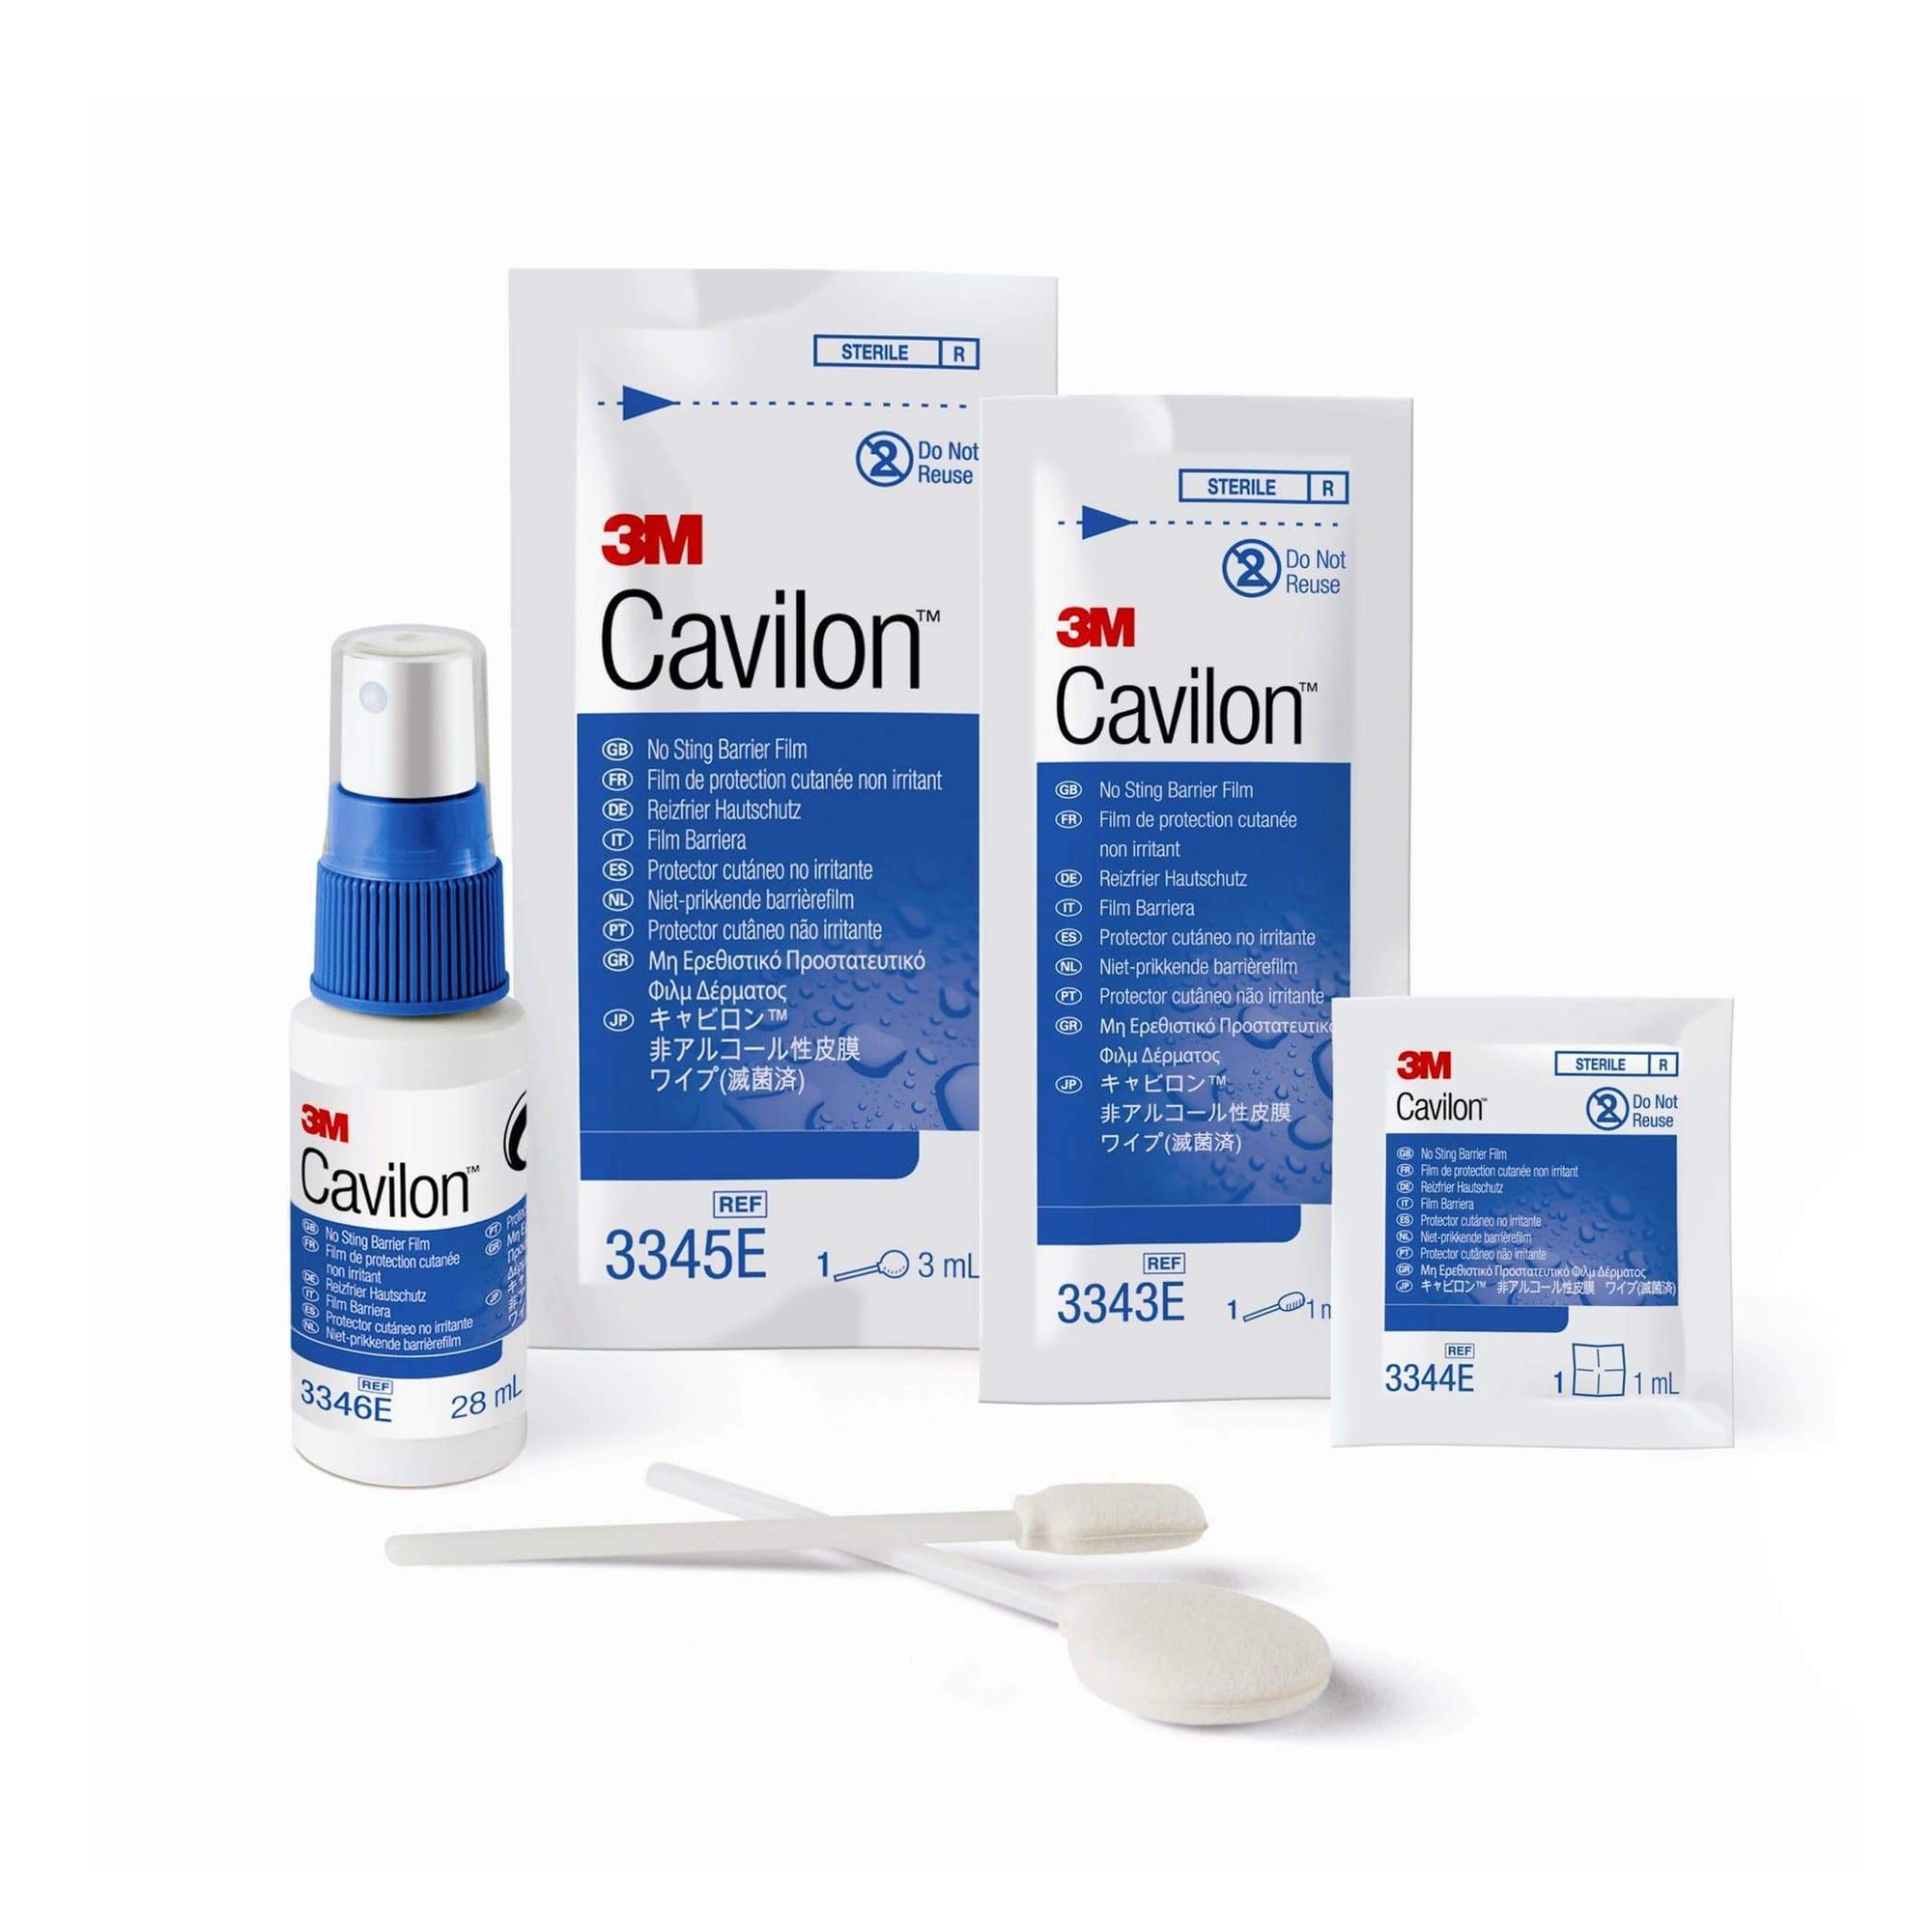 3M Healthcare Moisturiser & Barrier Cream Foam Applicator - Small / 1mL 3M Cavilon No Sting Barrier Film